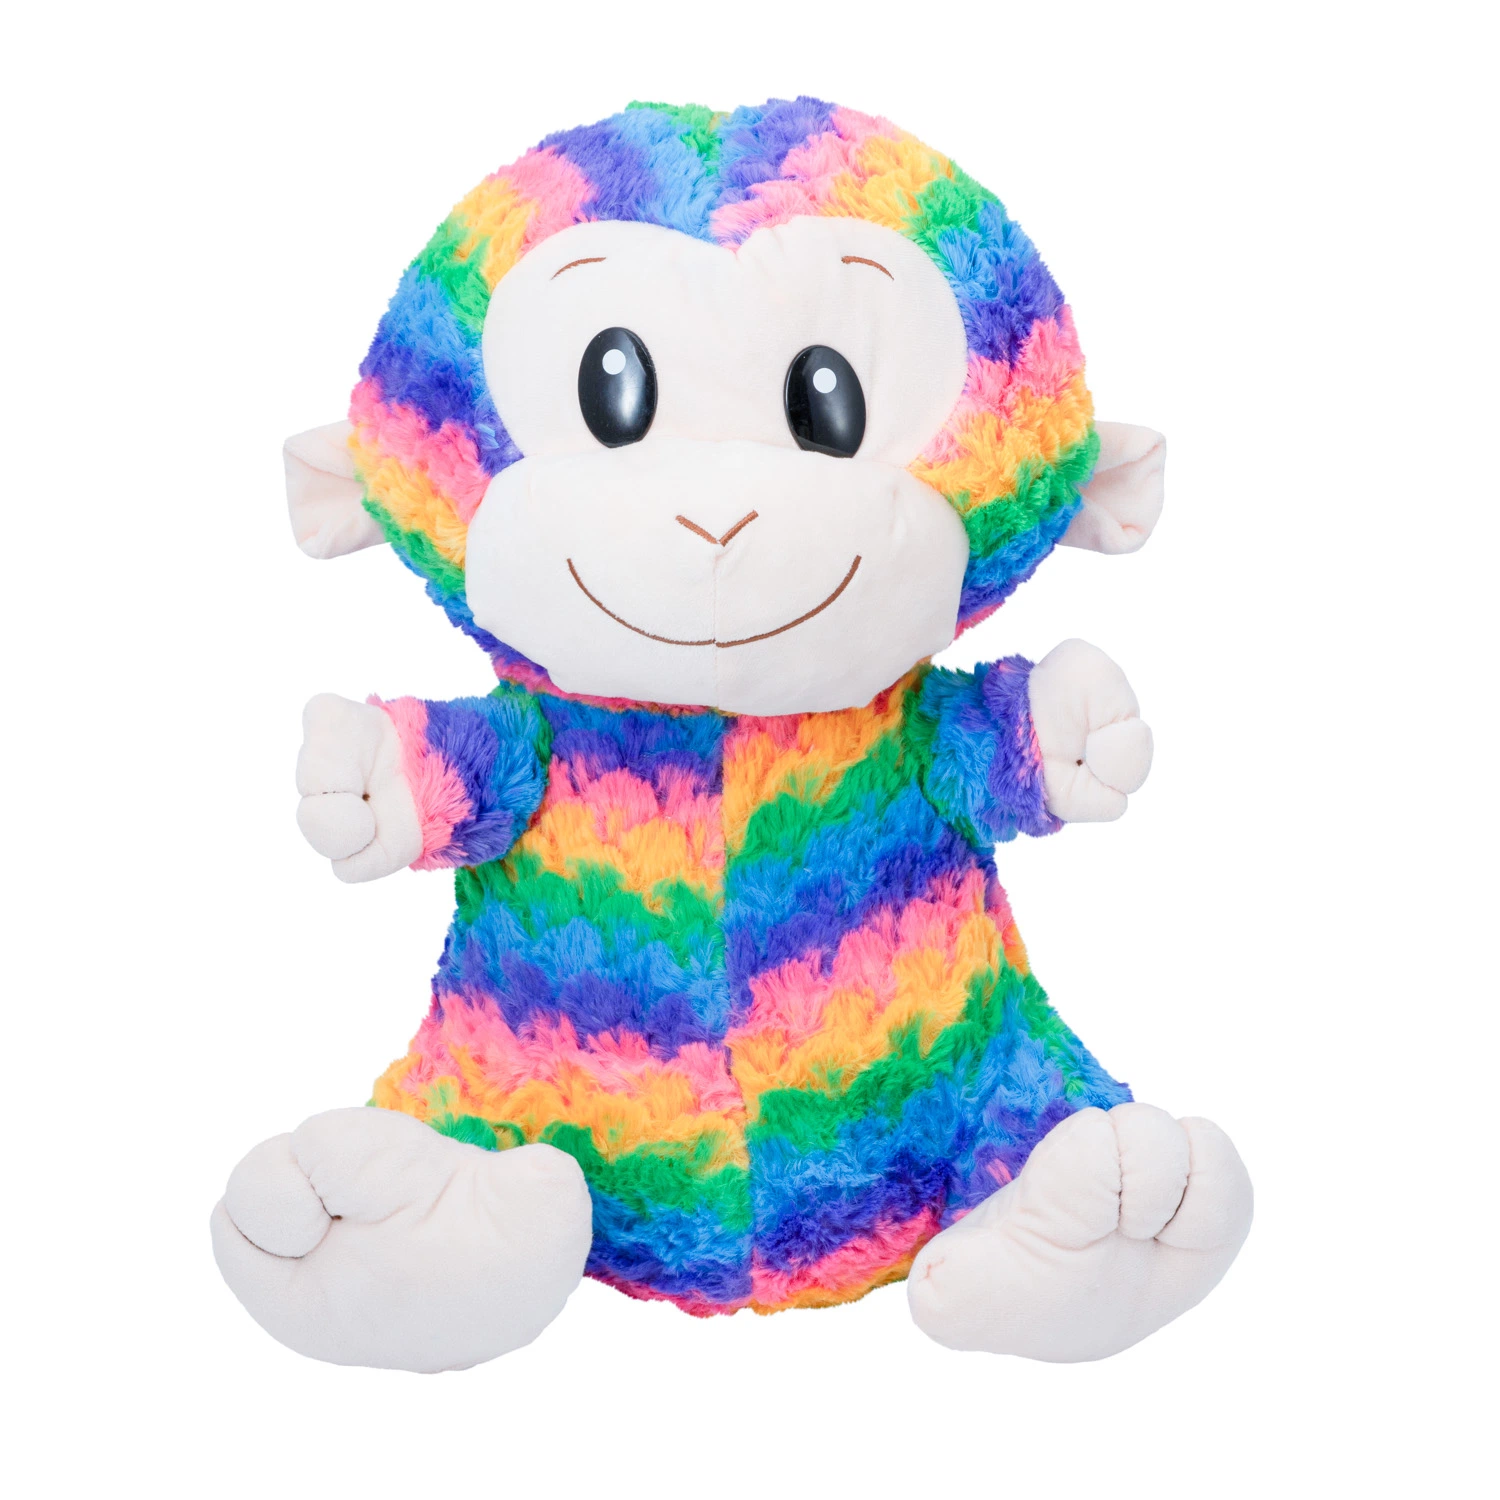 Soft Stuffed Plush Baby Toy Cartoon Cute Rainbow Monkey